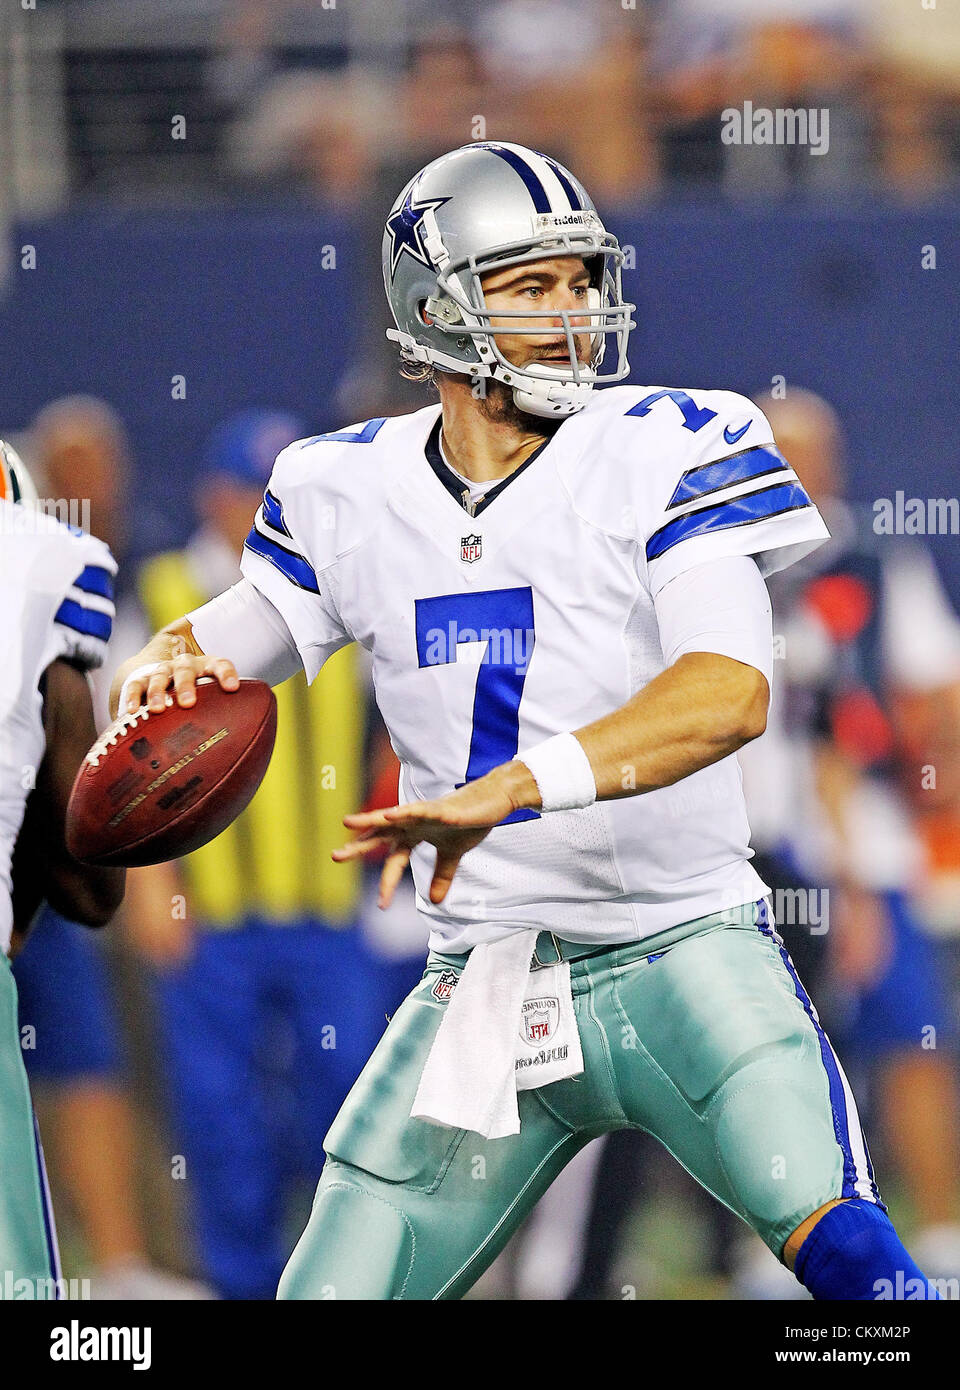 Arlington, Texas, USA. 29th Aug 2012. Dallas Cowboys quarterback